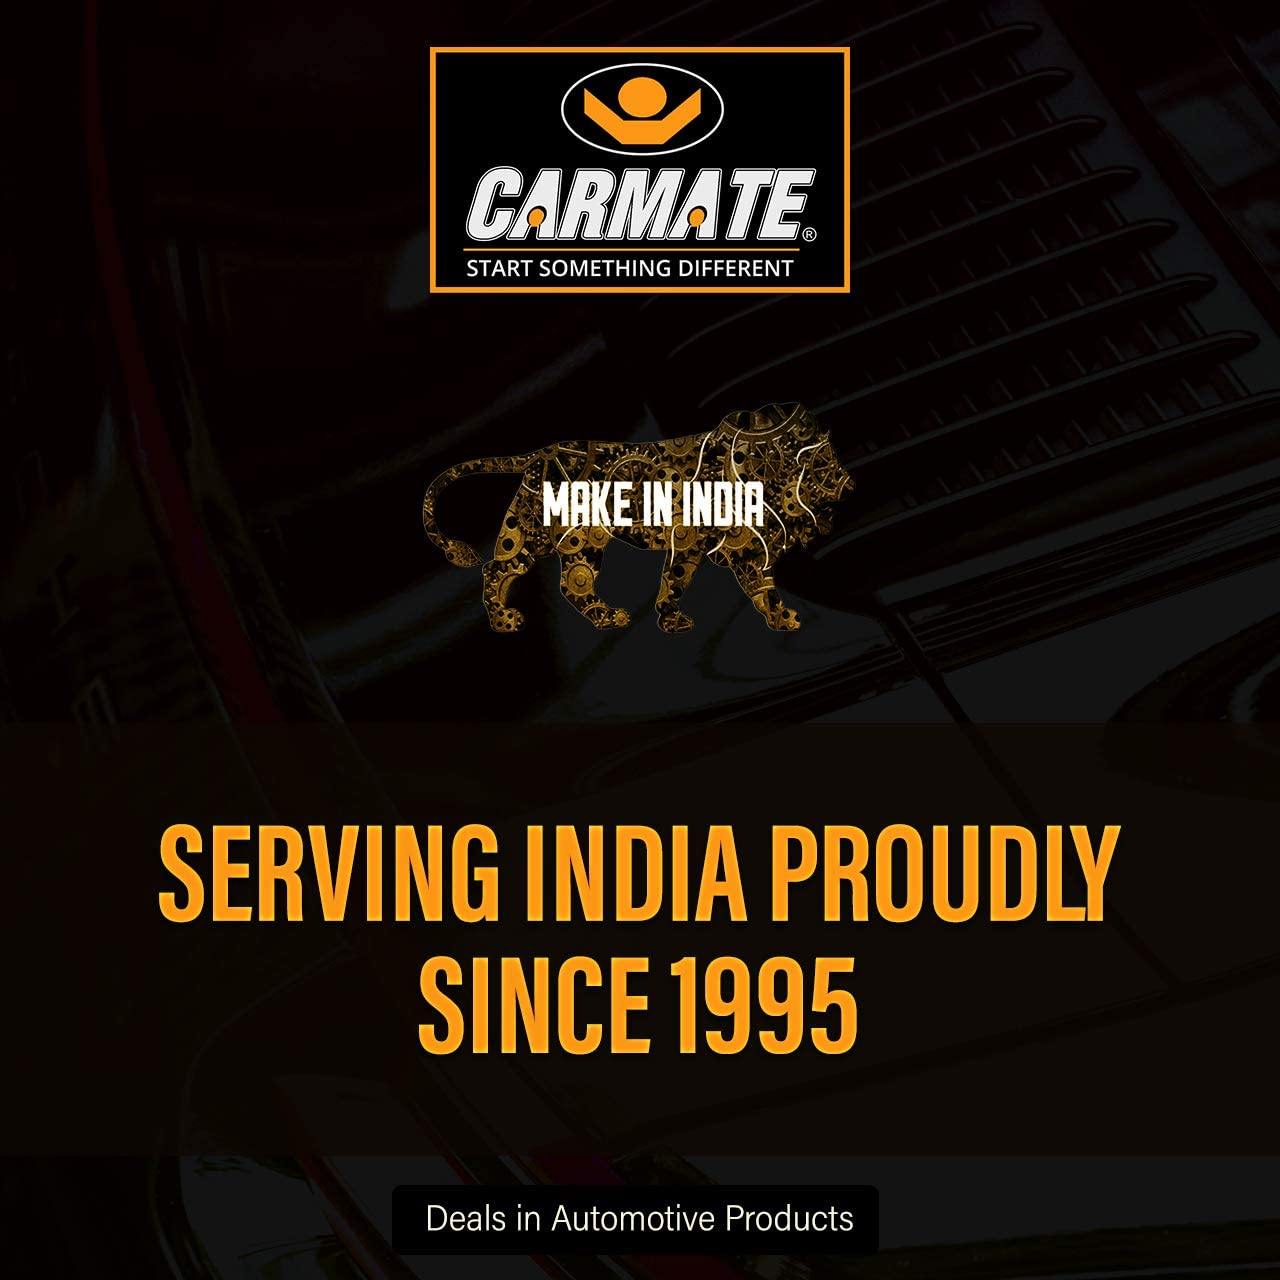 Carmate ECO Car Body Cover (Grey) for Renault - Fluence - CARMATE®